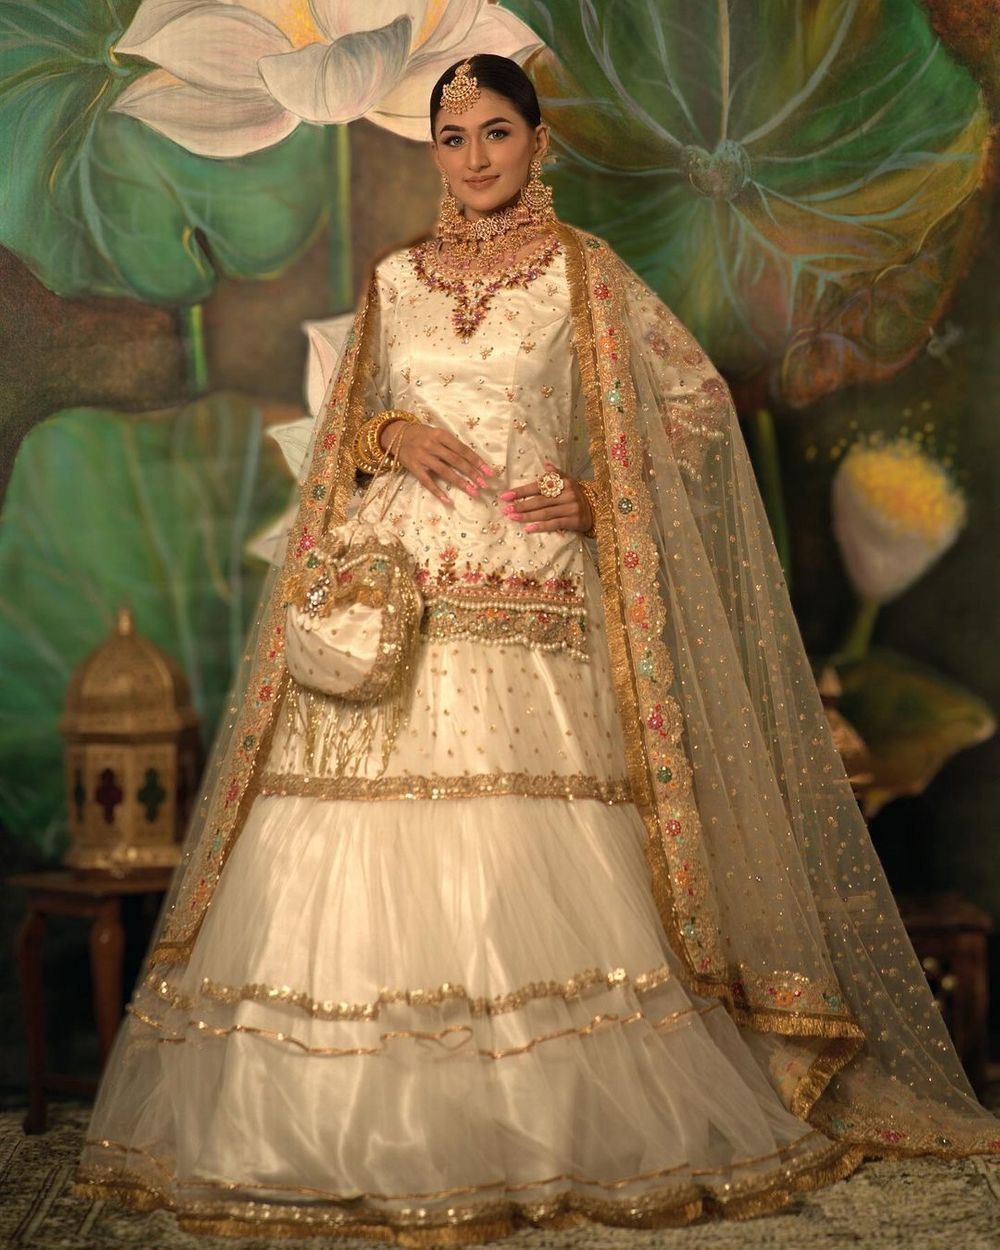 Photo From Muslim Bridal Look - By Reshma Fattepurkar Makeup Artist